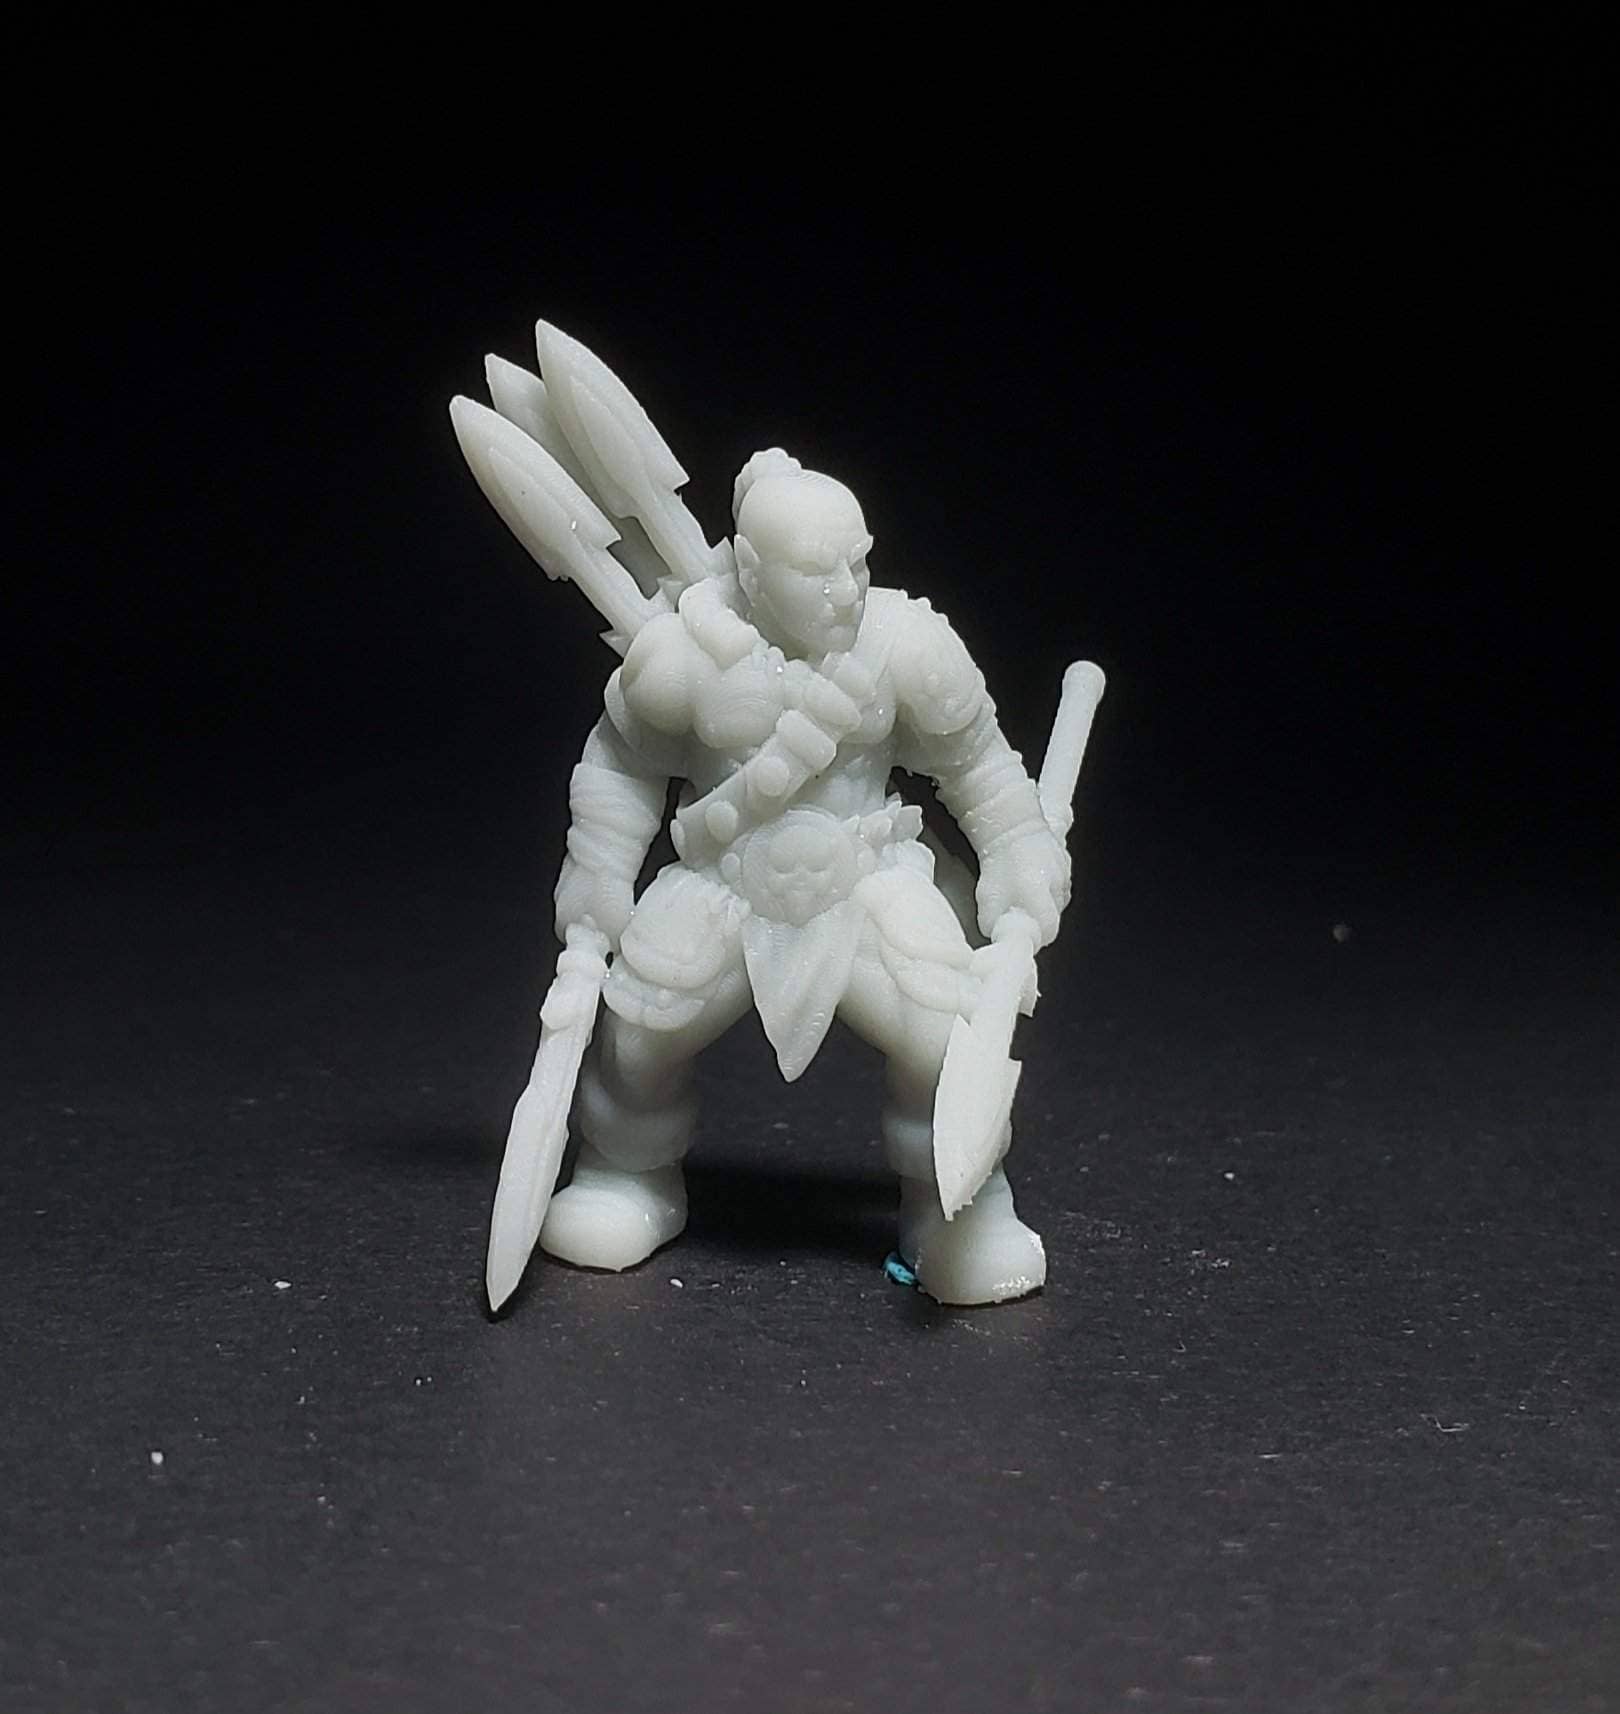 Halforc Spearman-Onmioji-Fighter,Human,Tribal